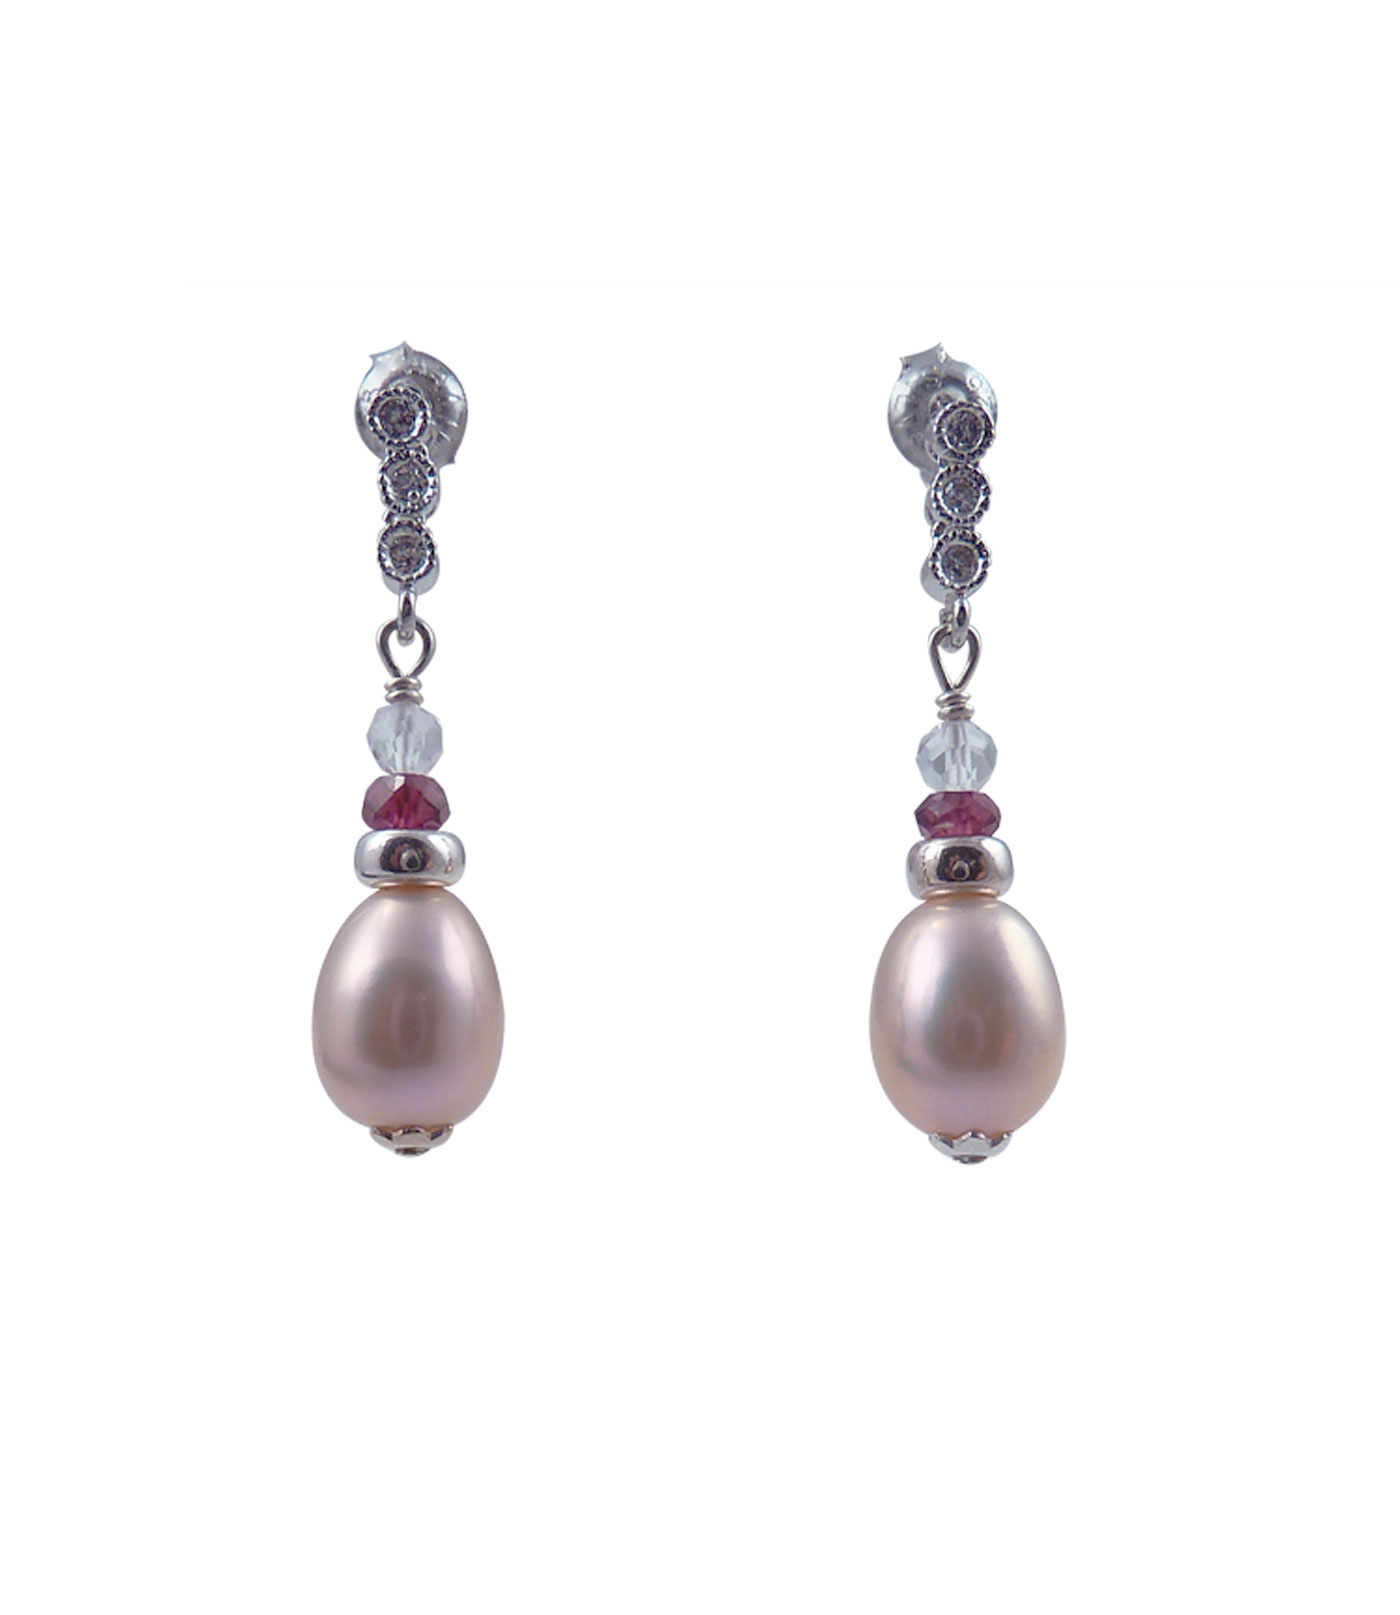 Pearl earrings lavender-silvery pearls. Modern pearl jewelry